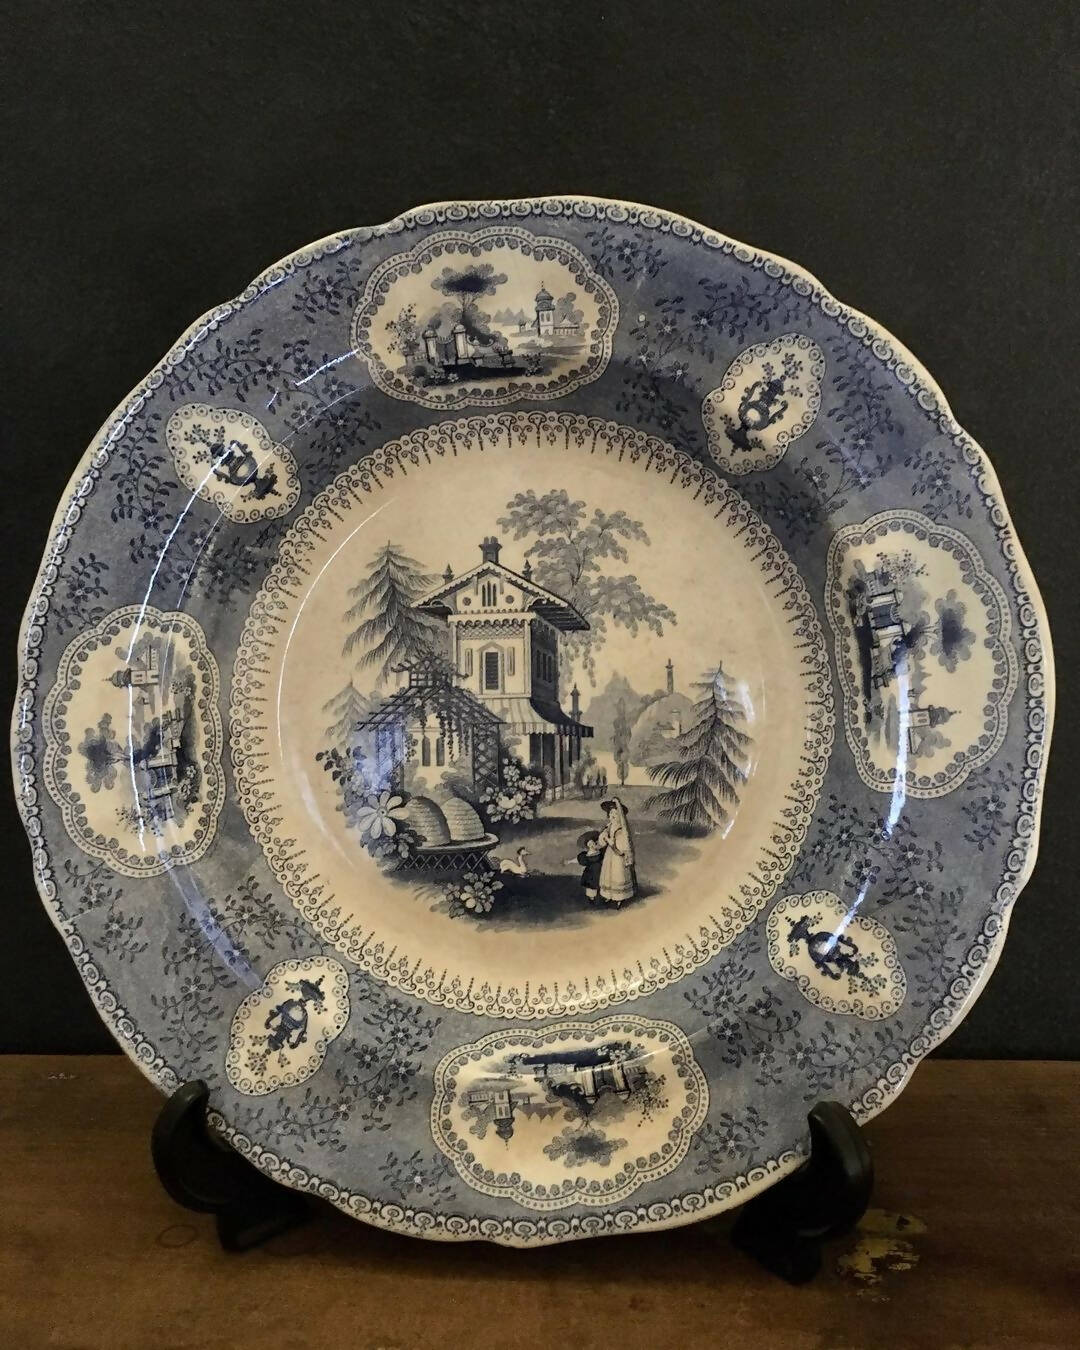 19th century china plates